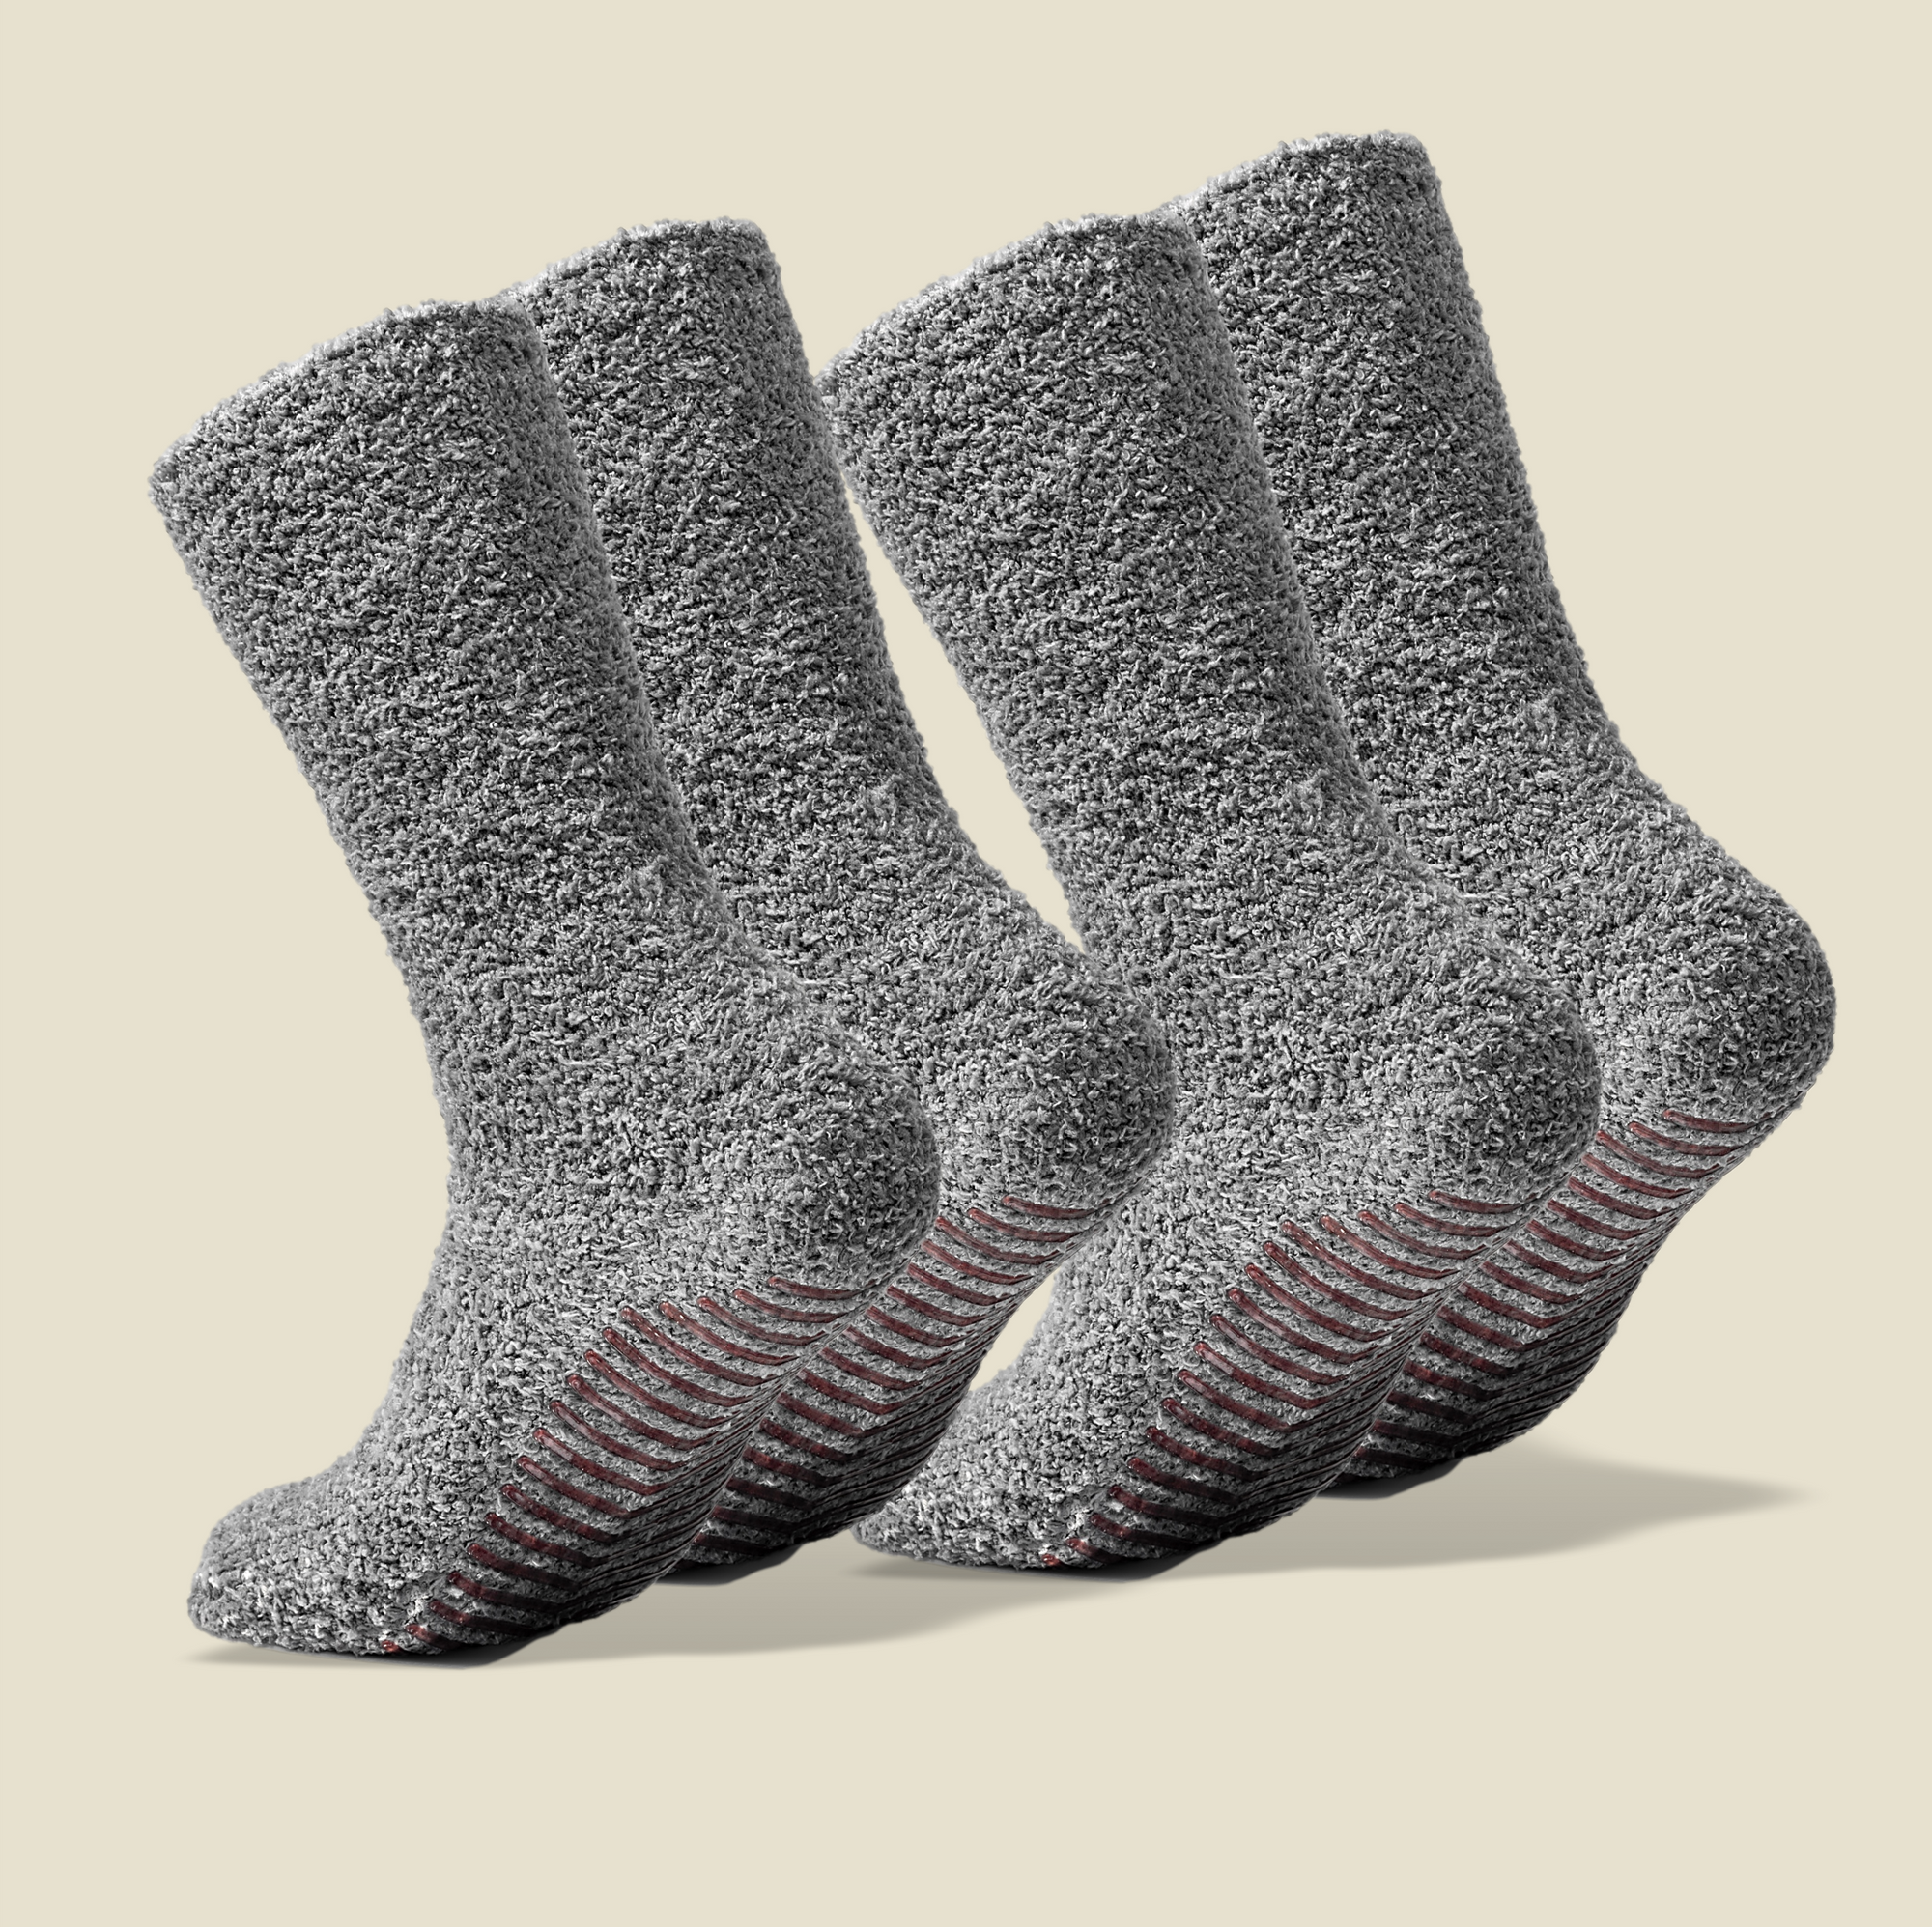 Light Grey Fuzzy Socks with Grips for Women x2 Pairs - Gripjoy Socks